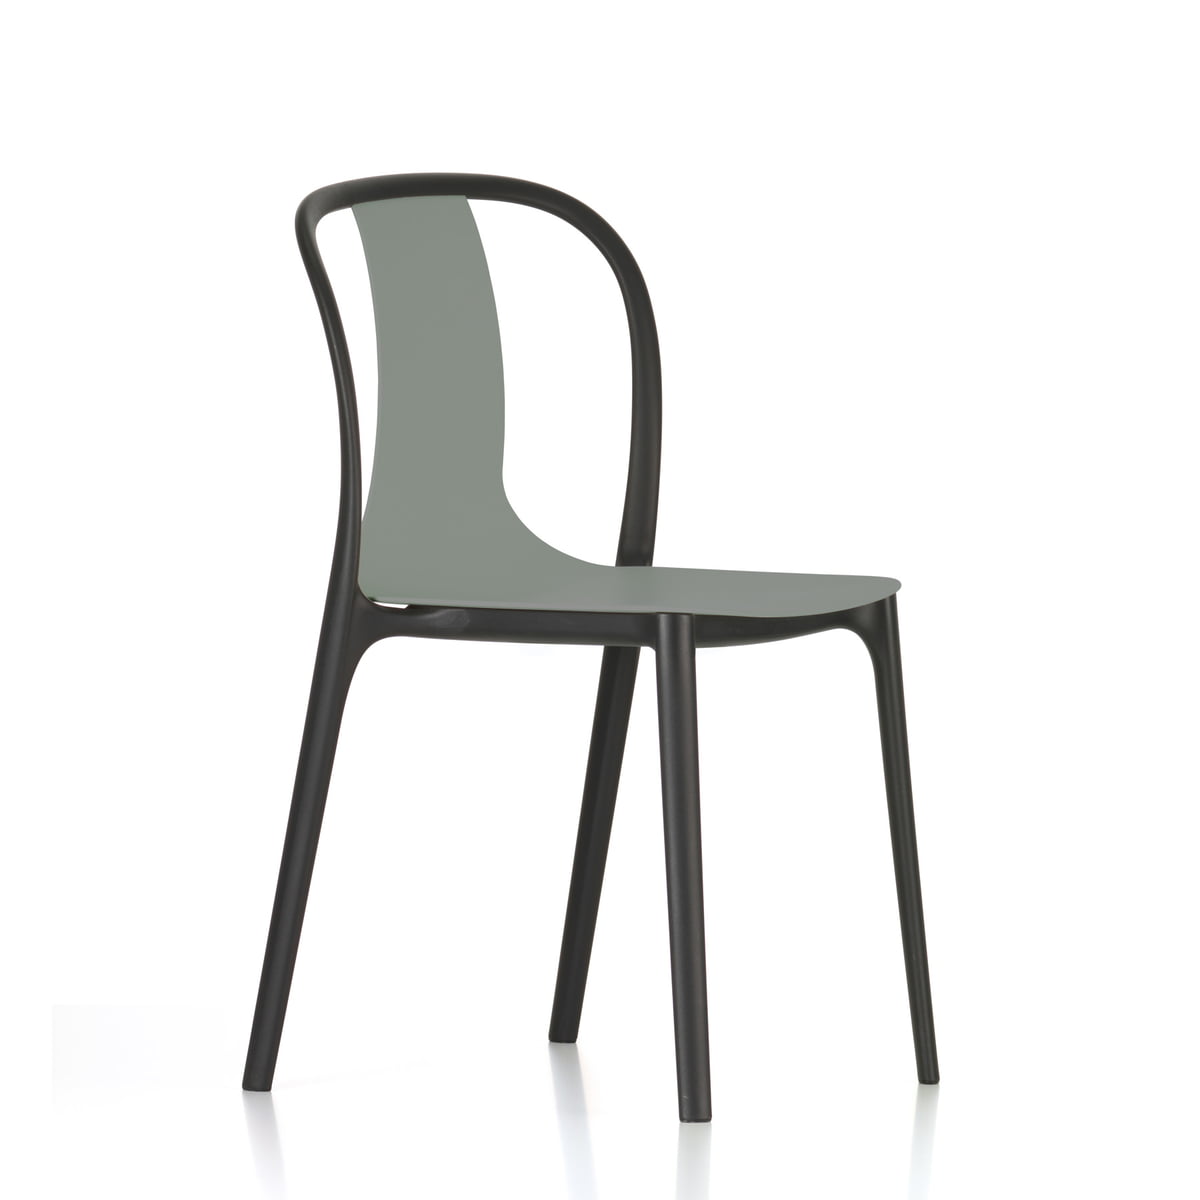 Vitra - Belleville Chair Plastic